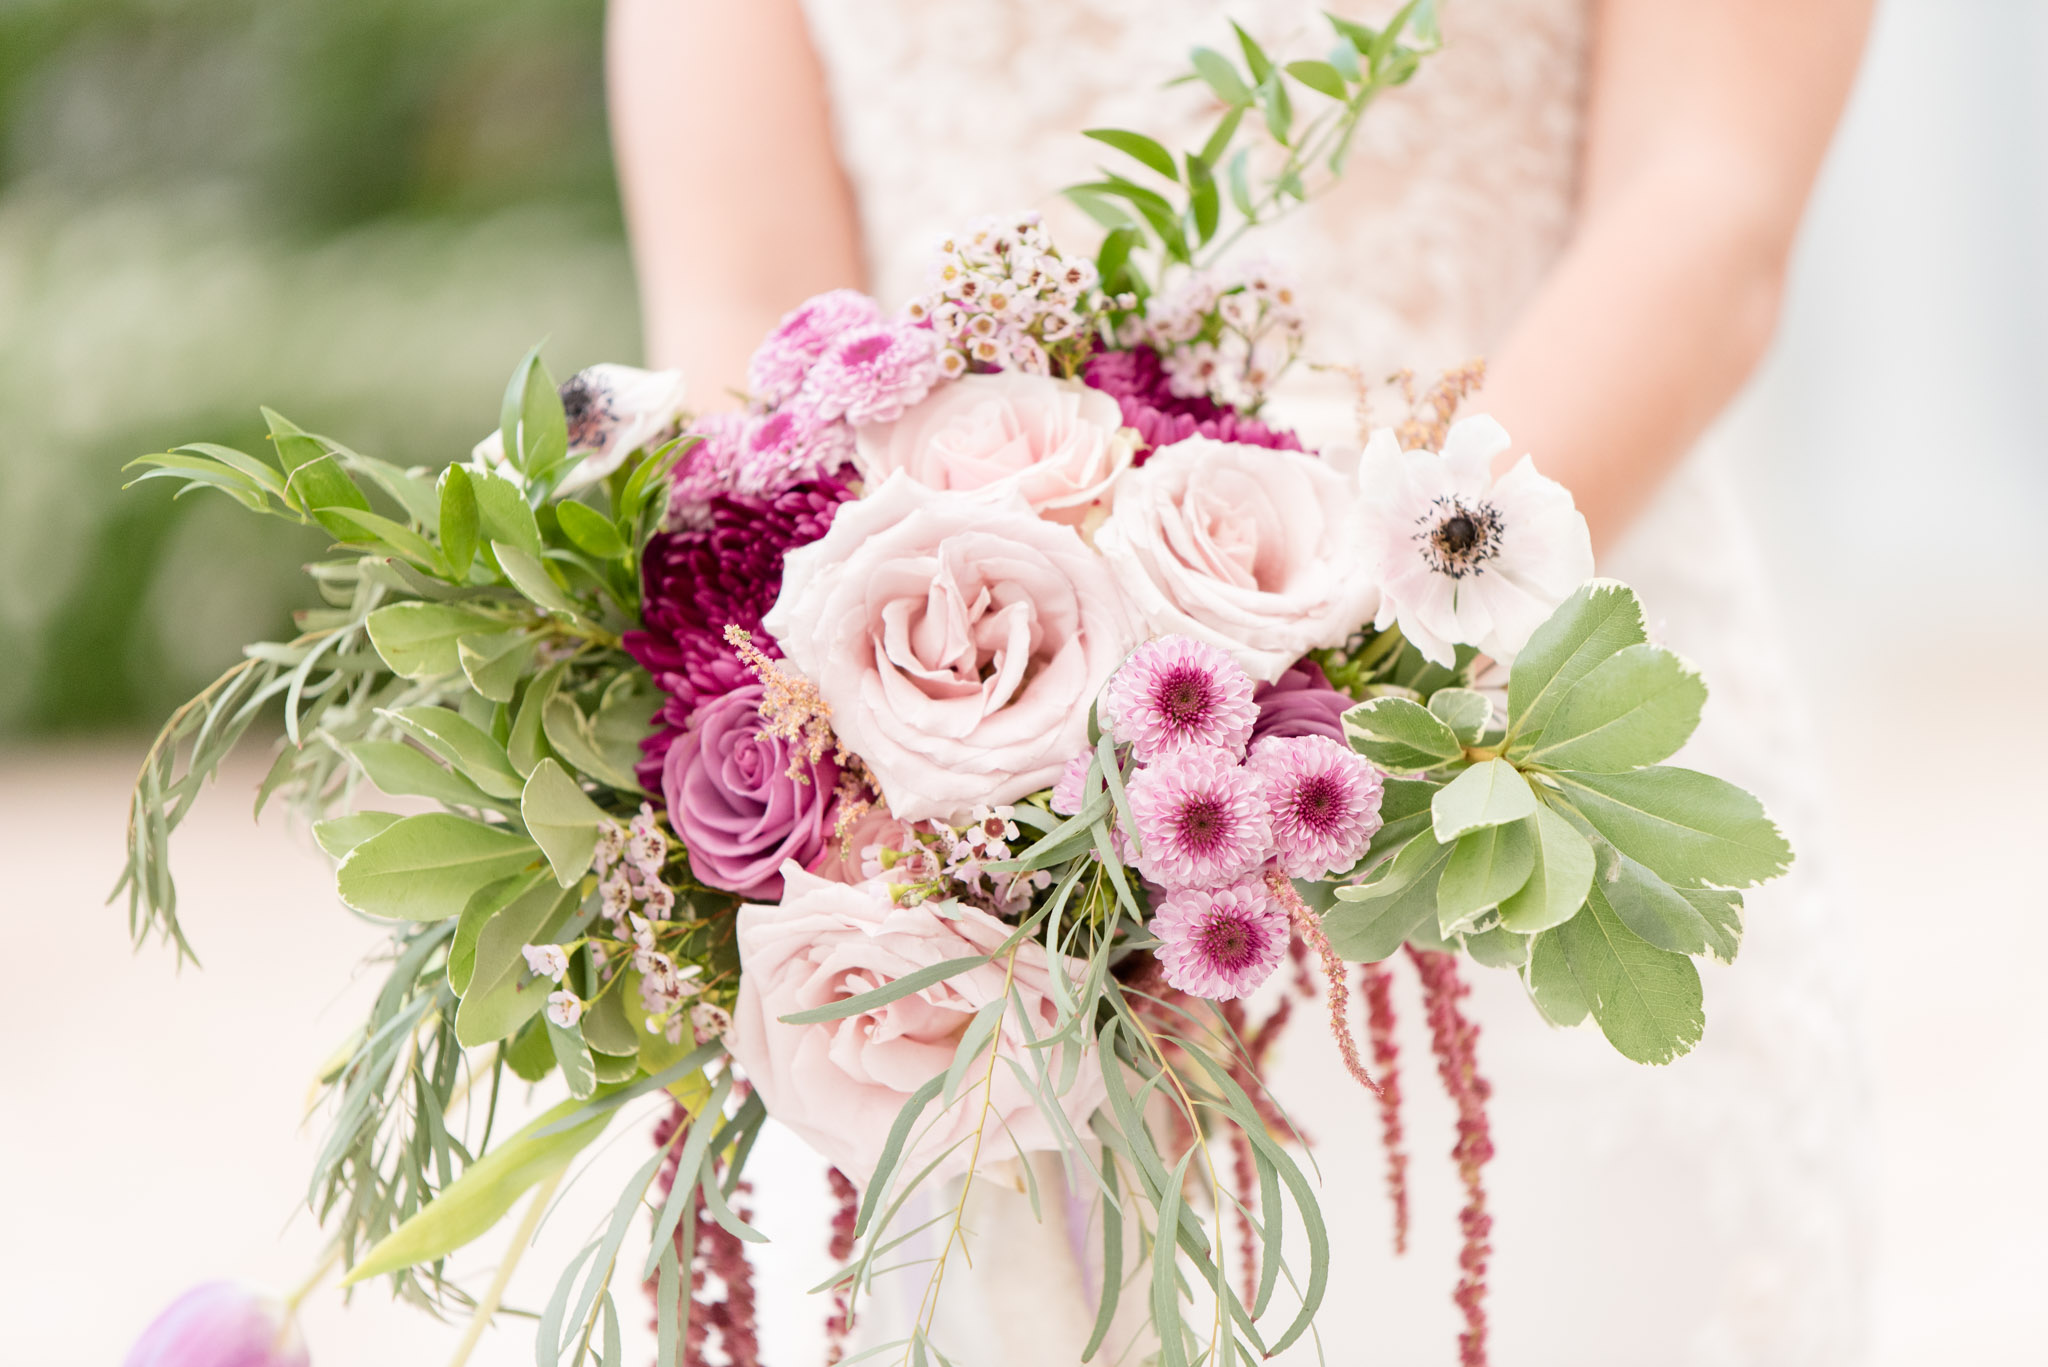 Bride holds bouquet of purple flowers.